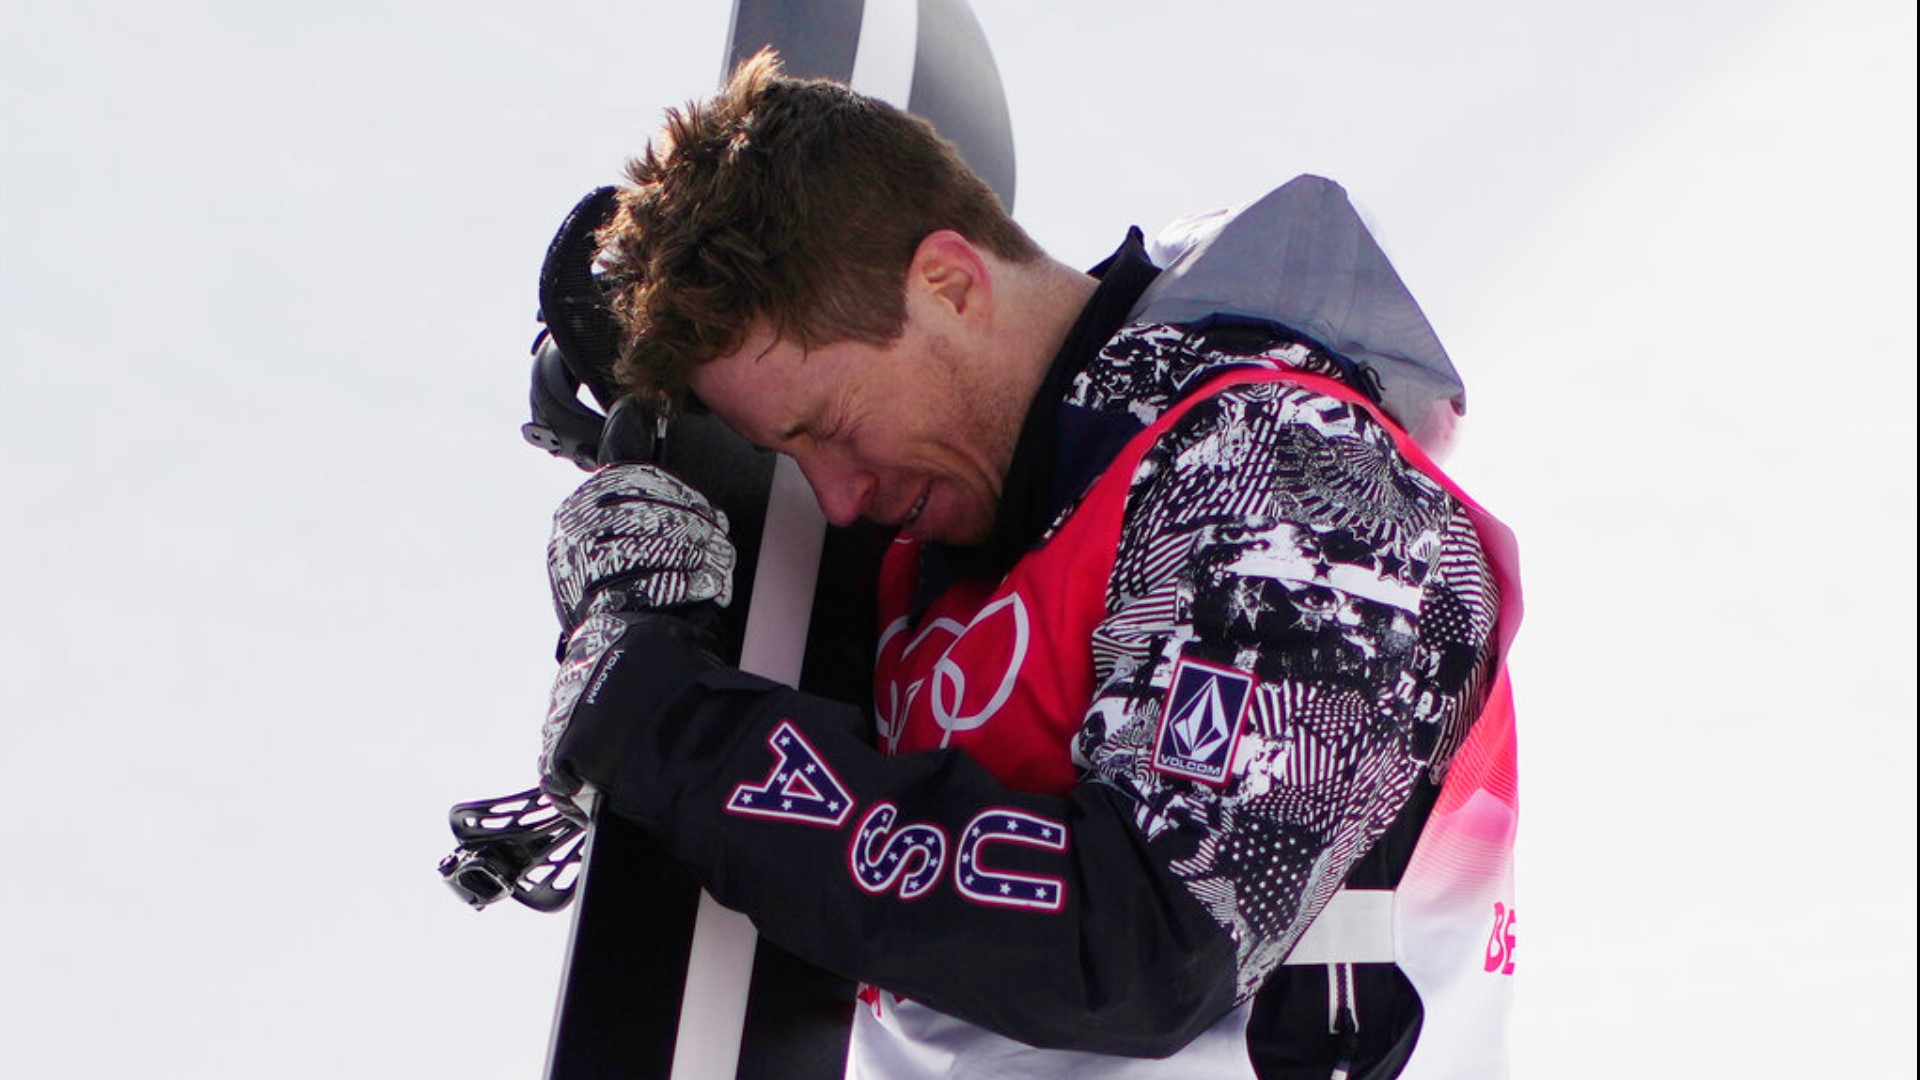 Shaun White - Professional Snowboarder - ABC of Snowboarding